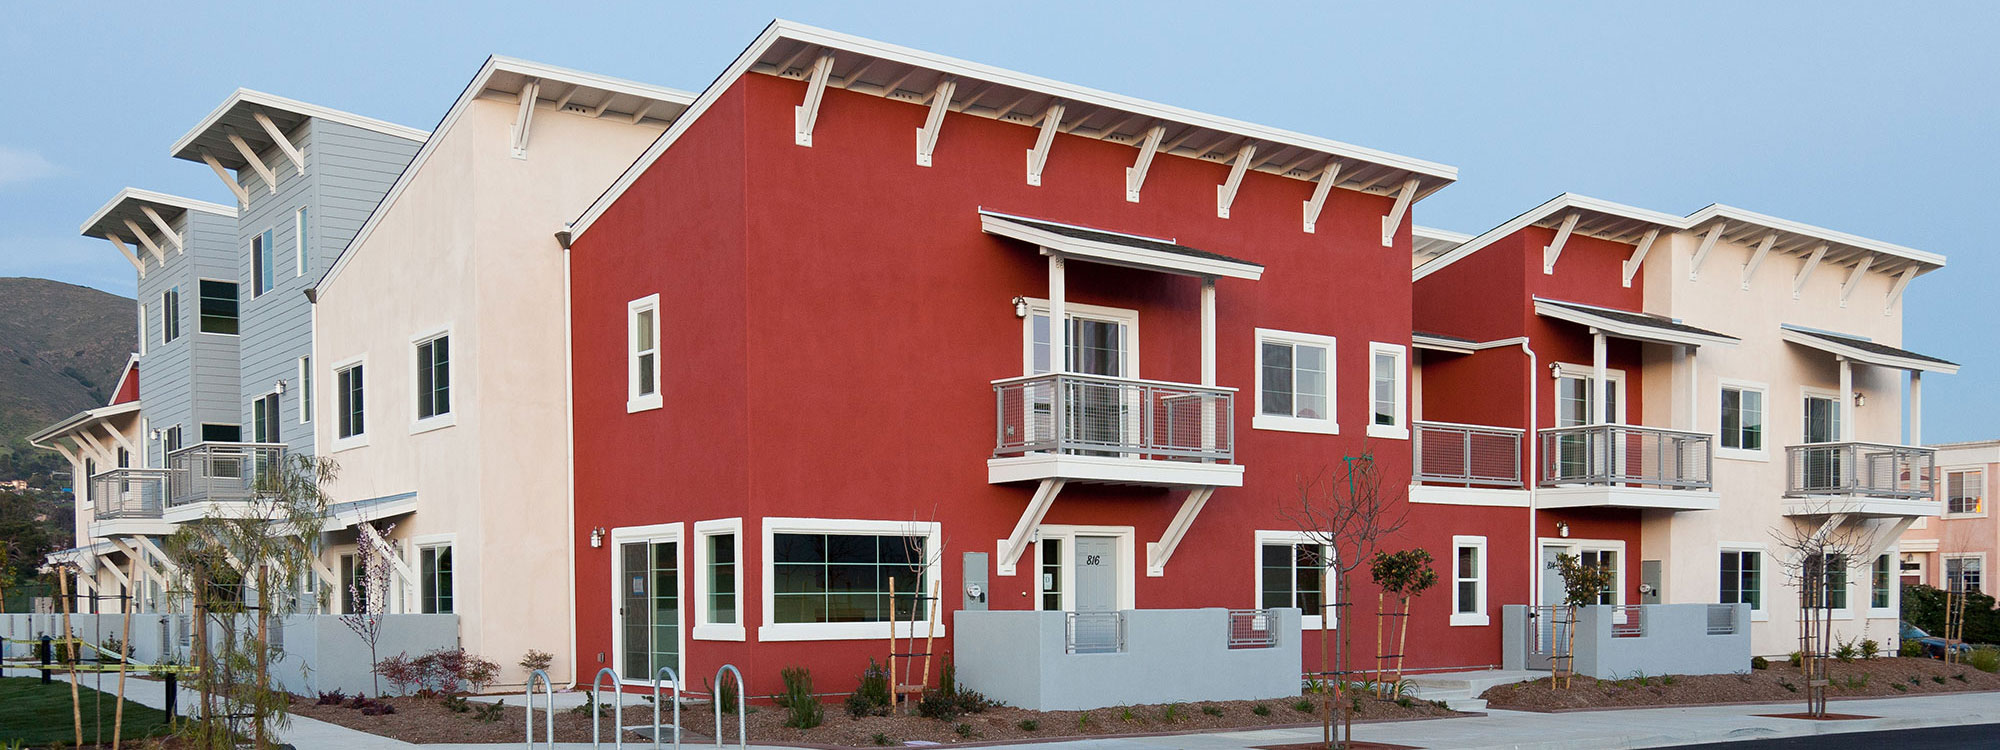 Multi-residence Builder - Condo Construction - Avila Beach Contractor - JW Design & Construction